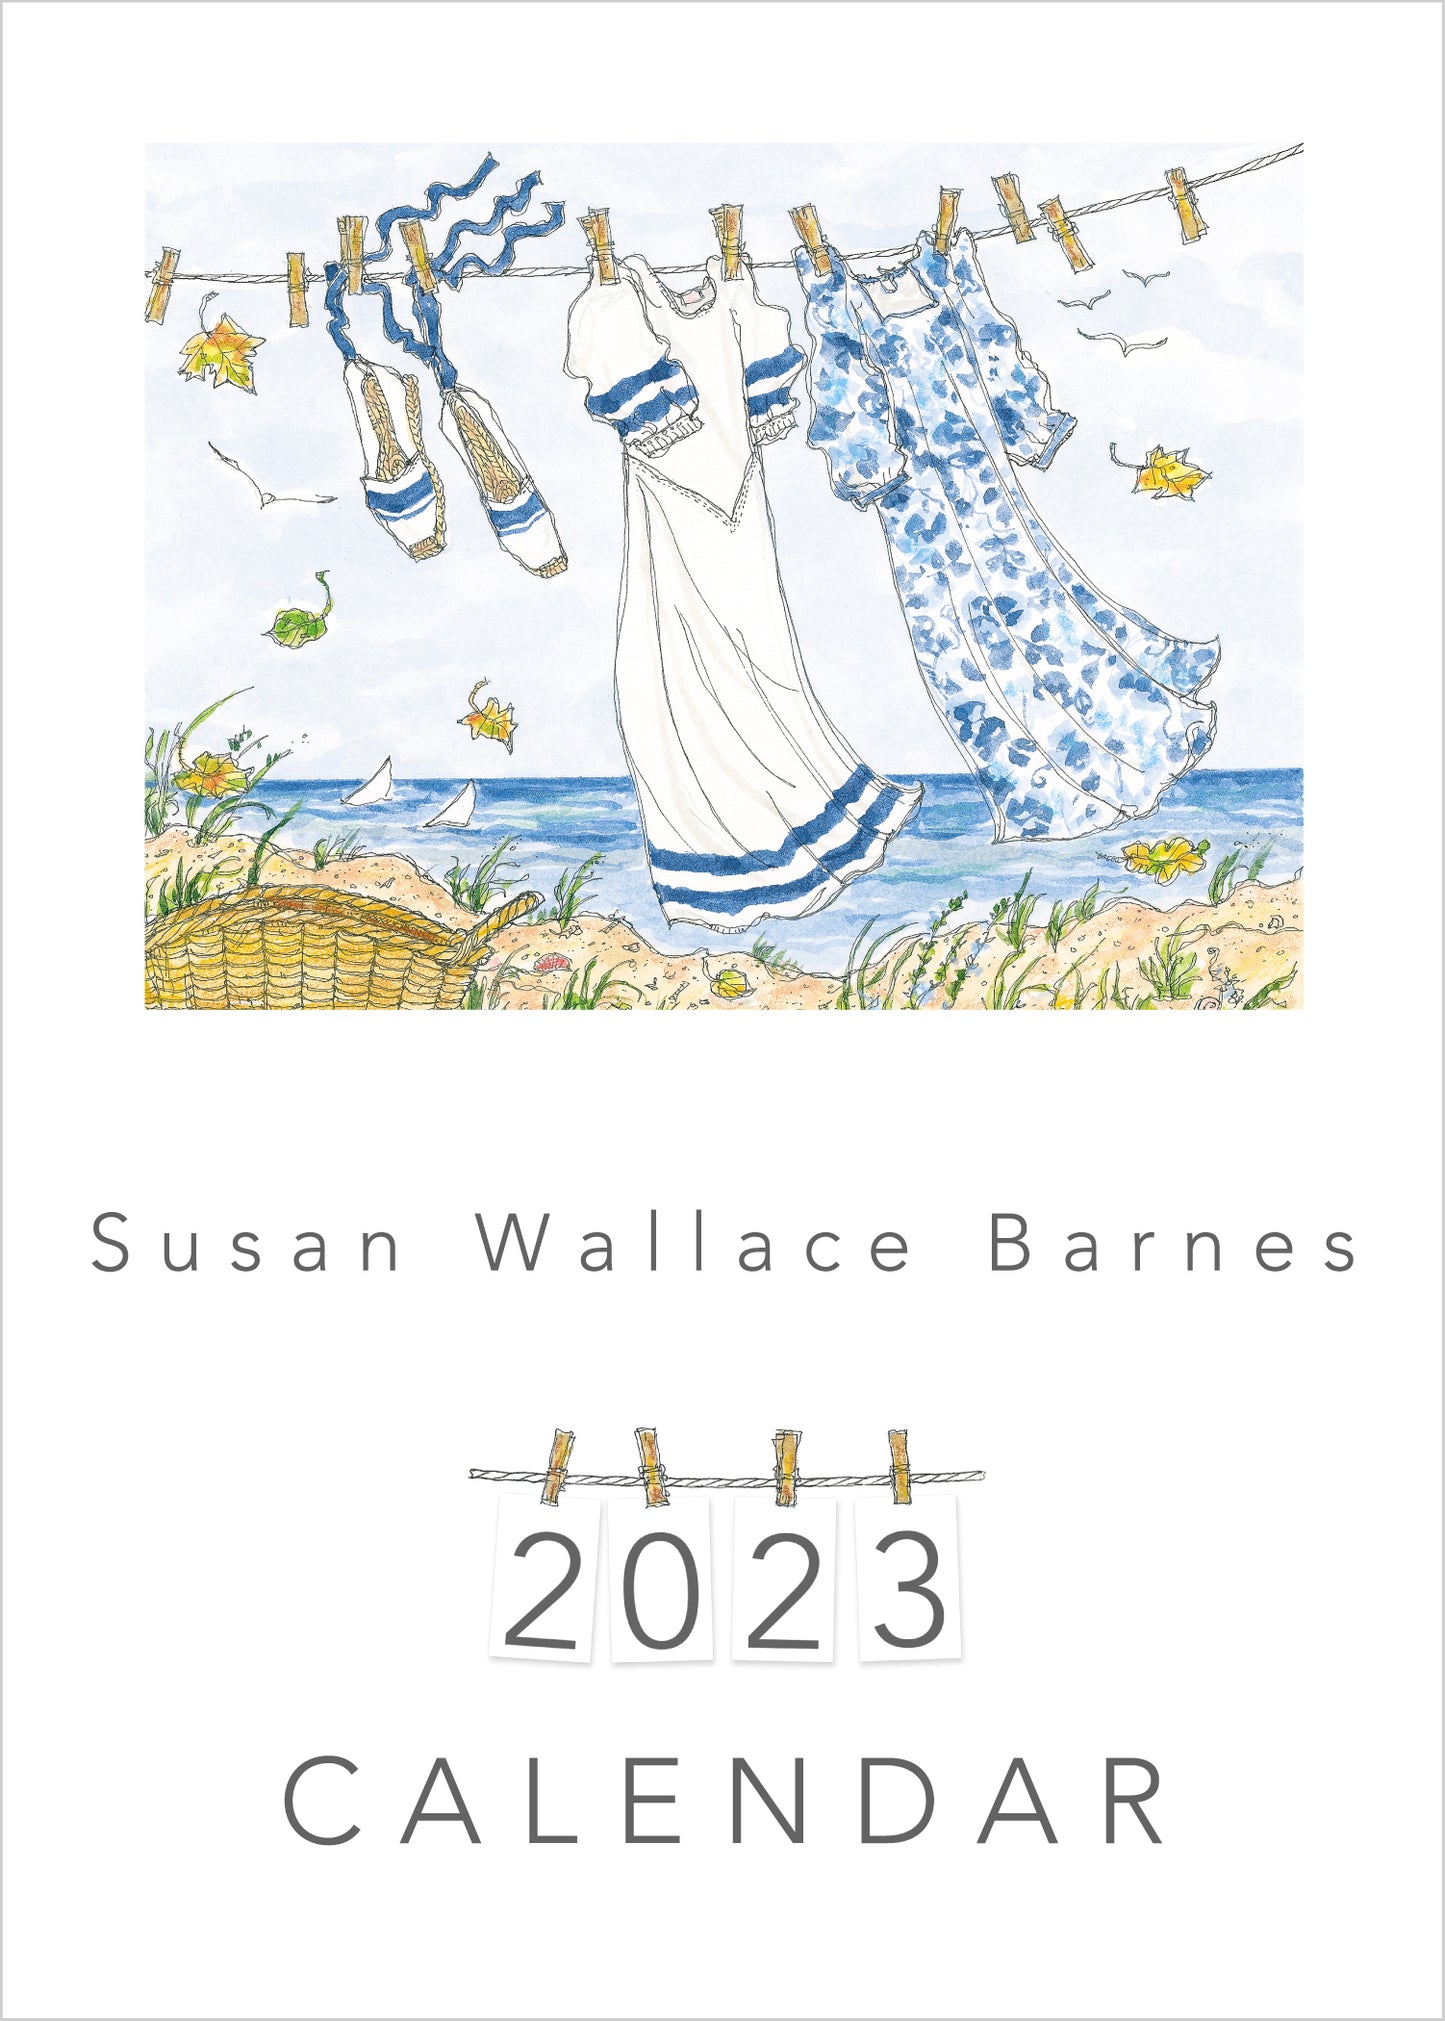 * 2023 * - 5 x 7 Susan Wallace Barnes 2023 Calendar